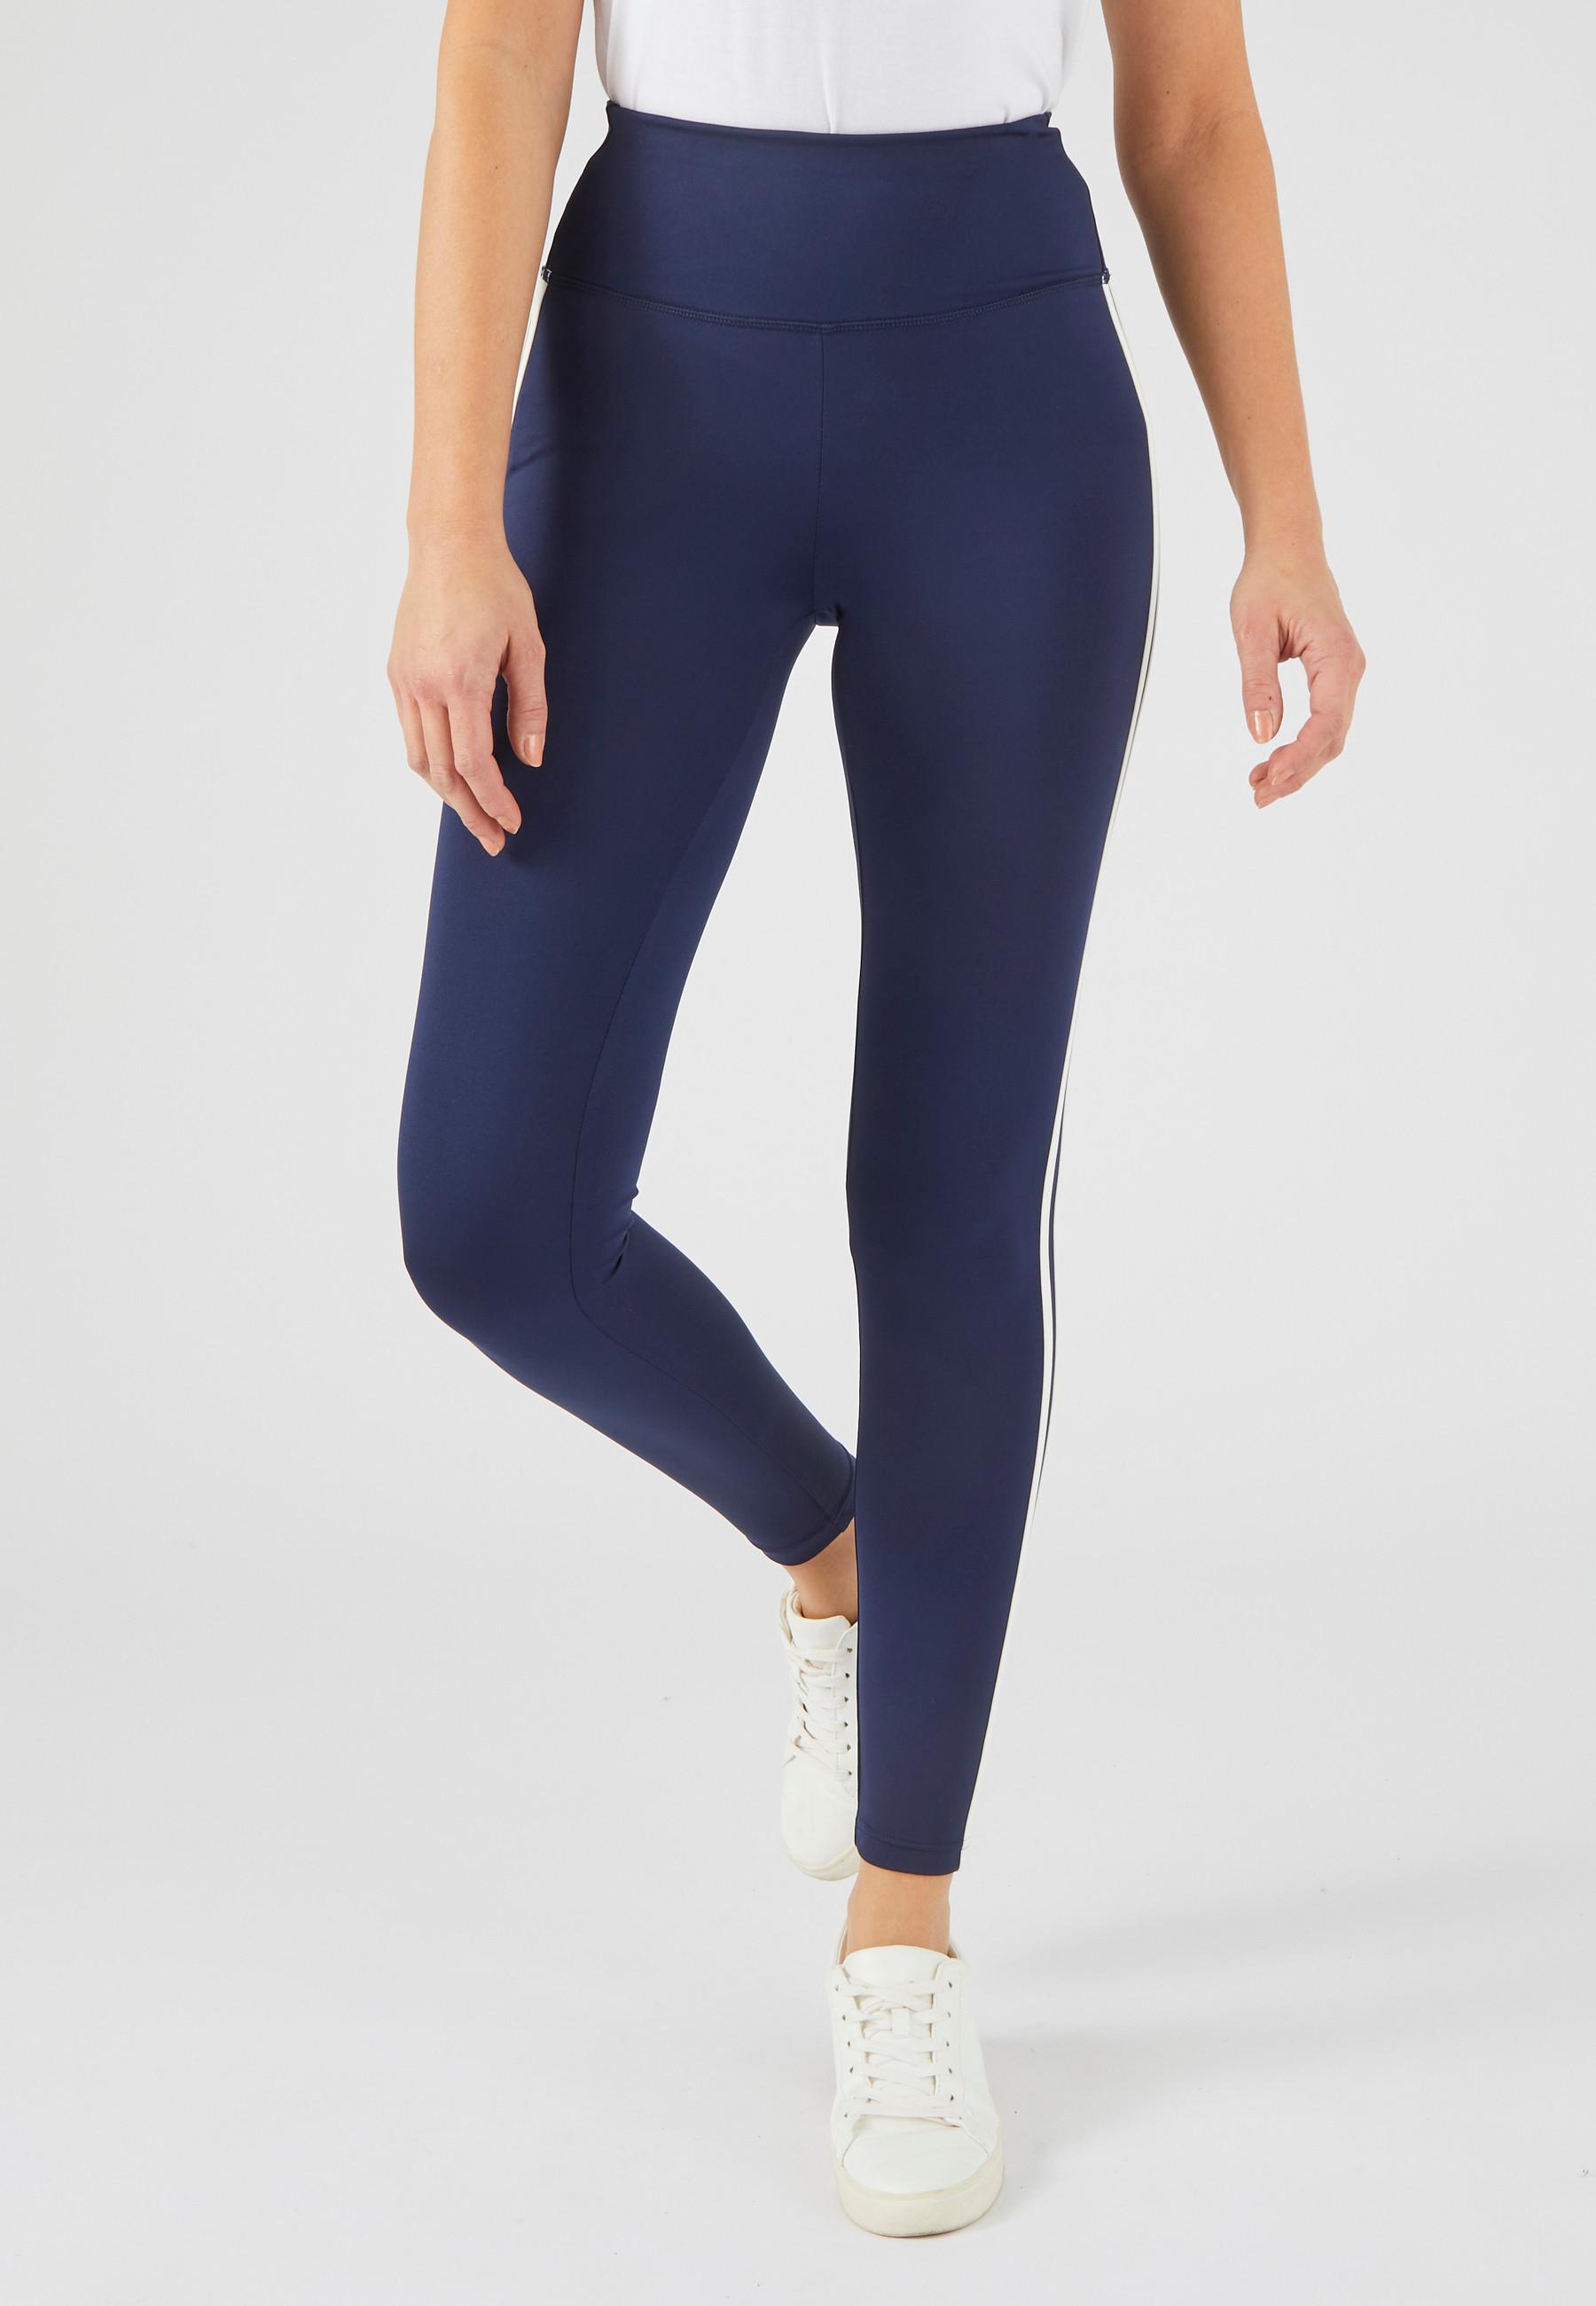 Sport-leggings, Perfect Fit By . Damen Blau 34/36 von Damart